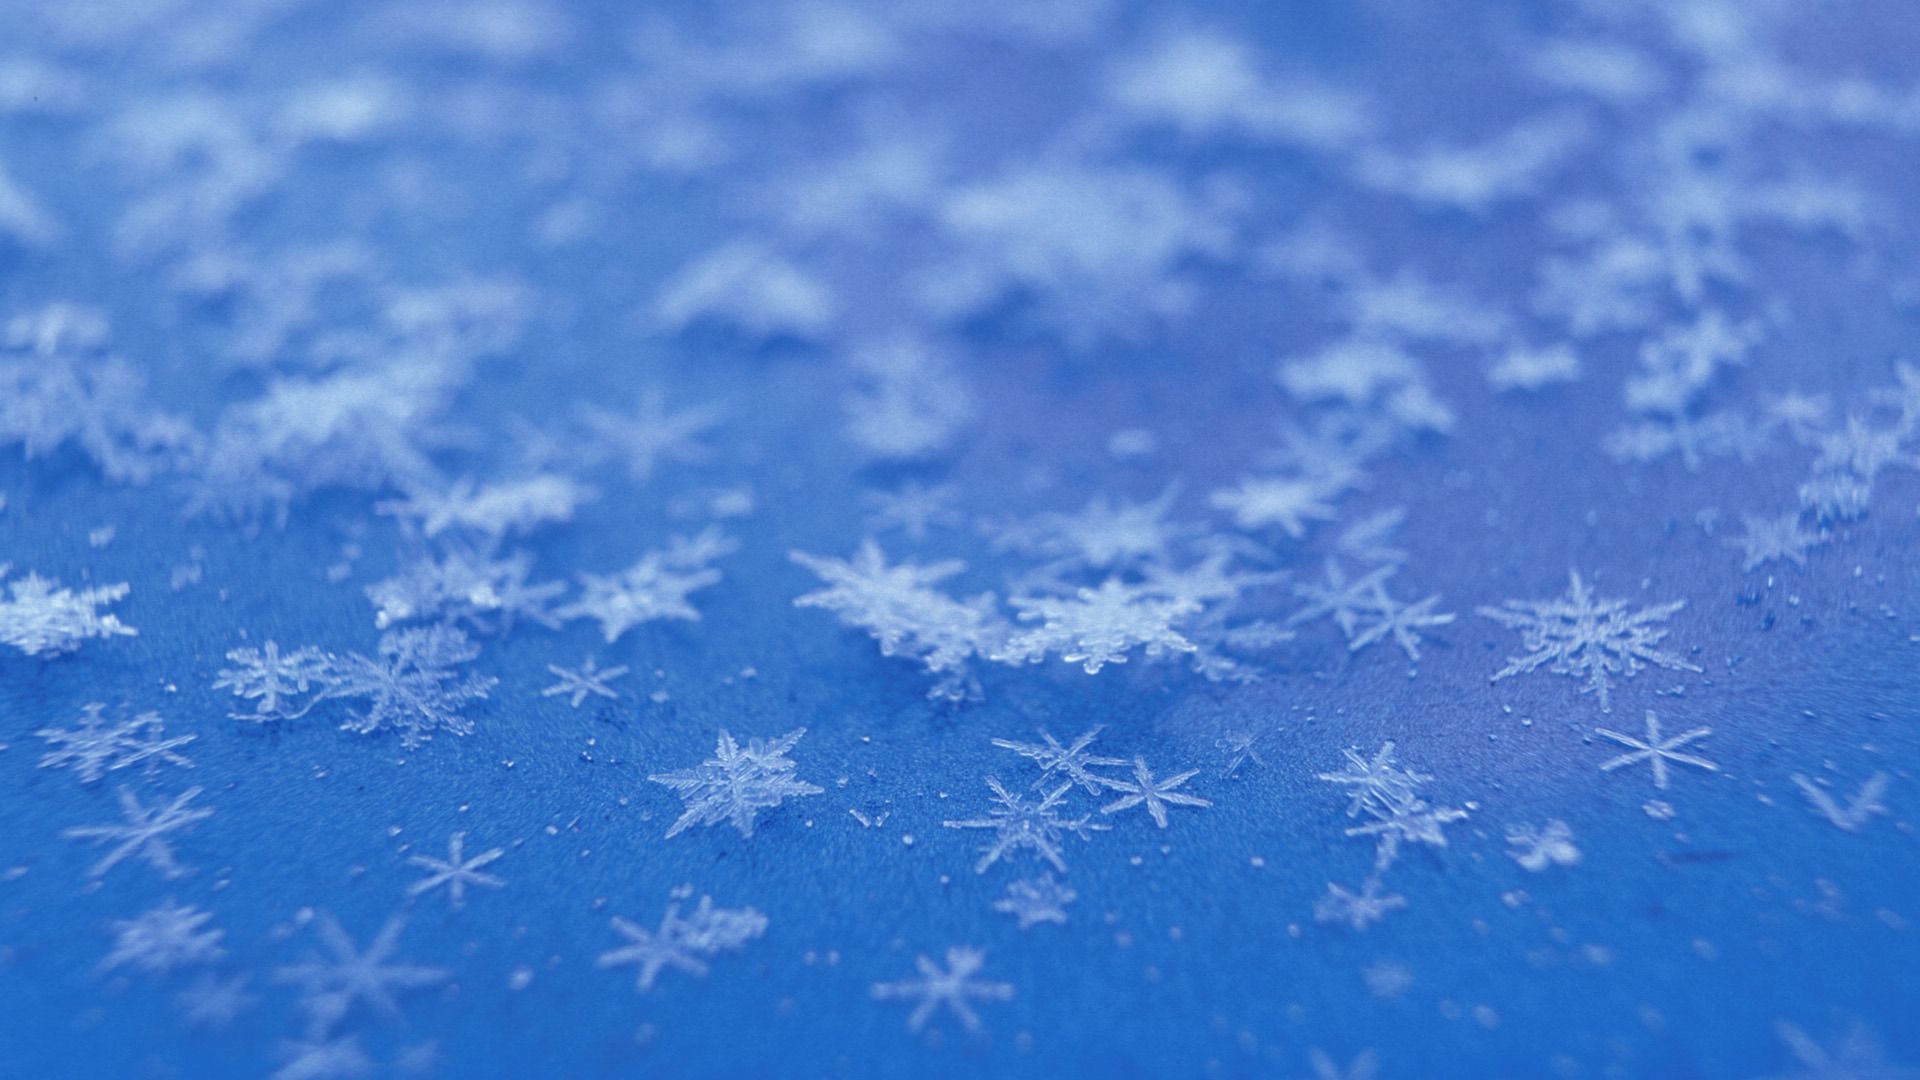 Free Desktop Snowflake Wallpaper HD. Snowflake wallpaper, Winter background, Snowflakes